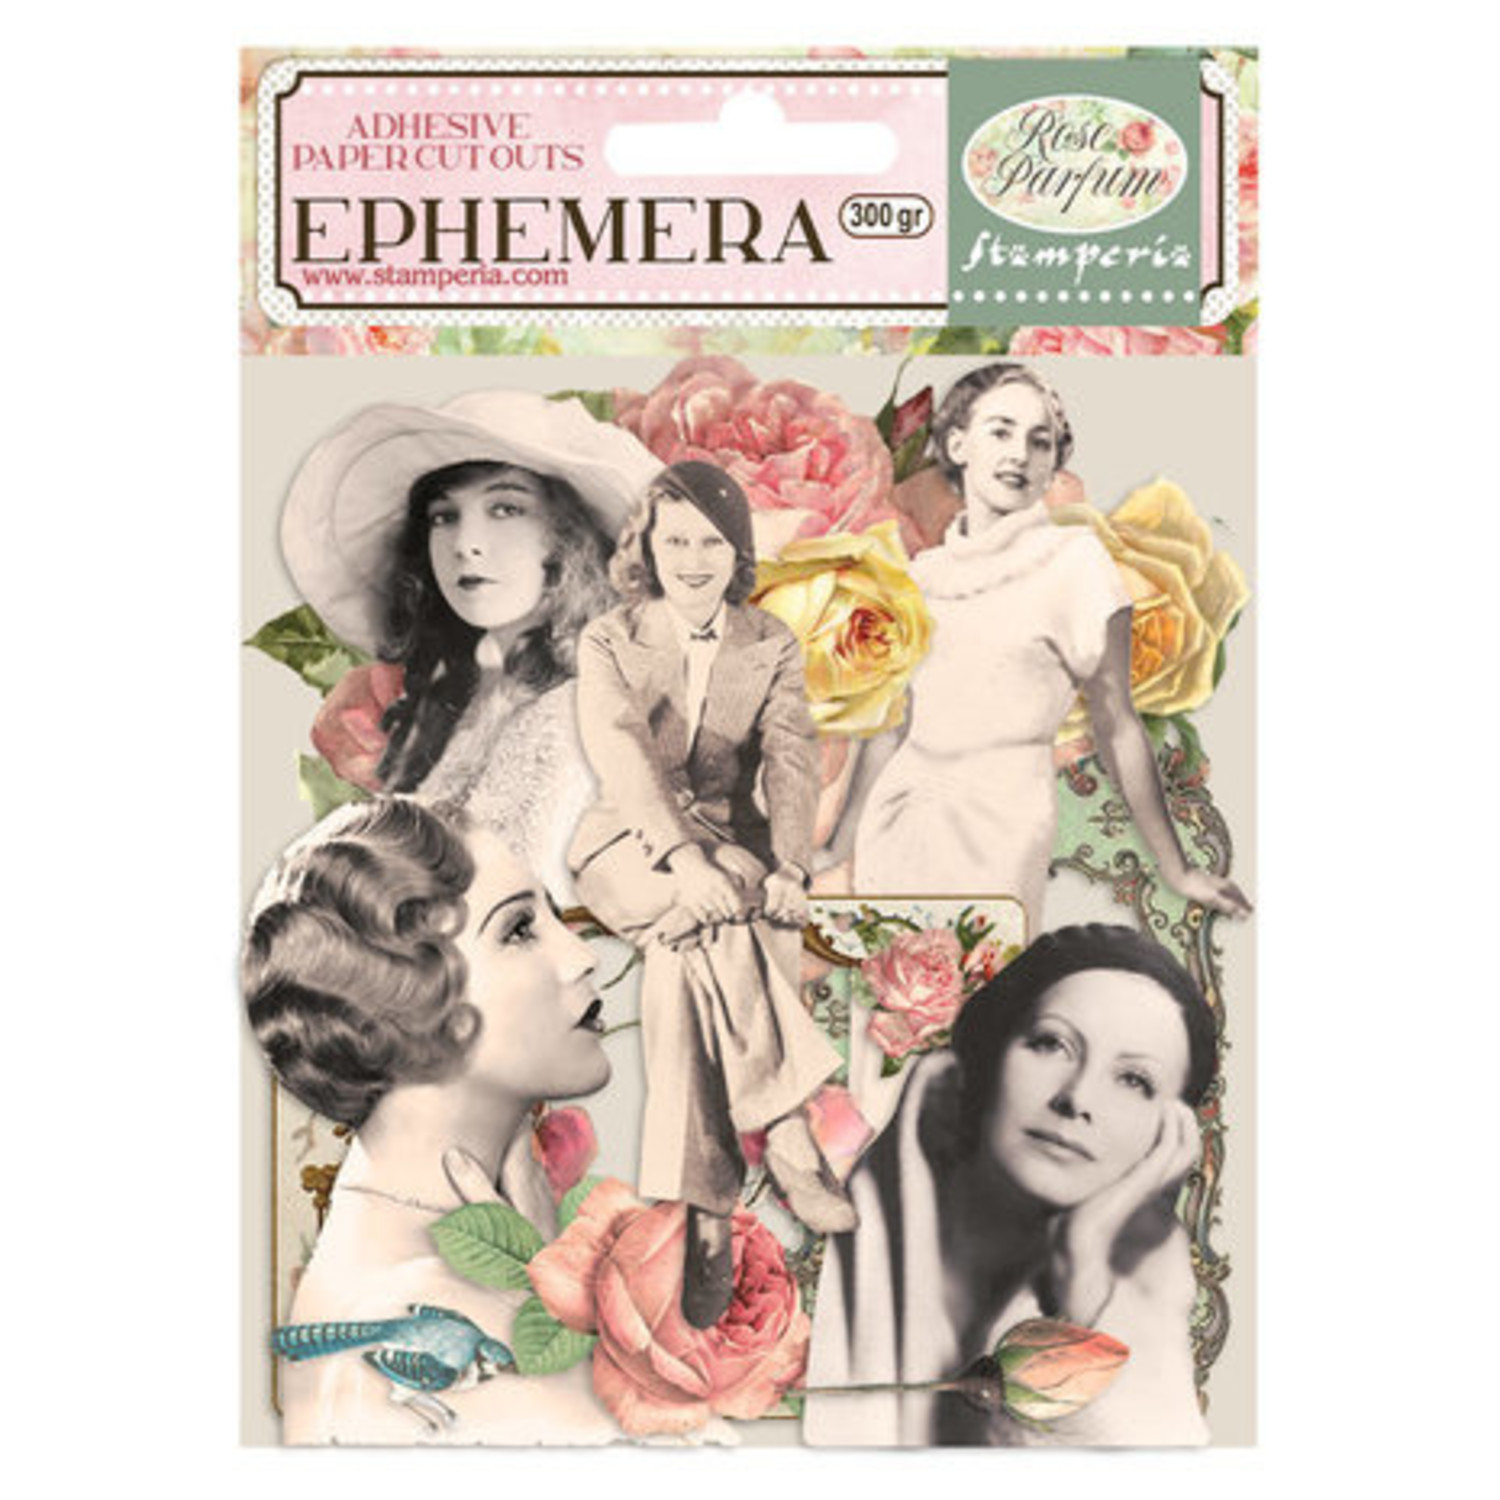 Stamperia Rose Parfum Ephemera Frames and Ladies